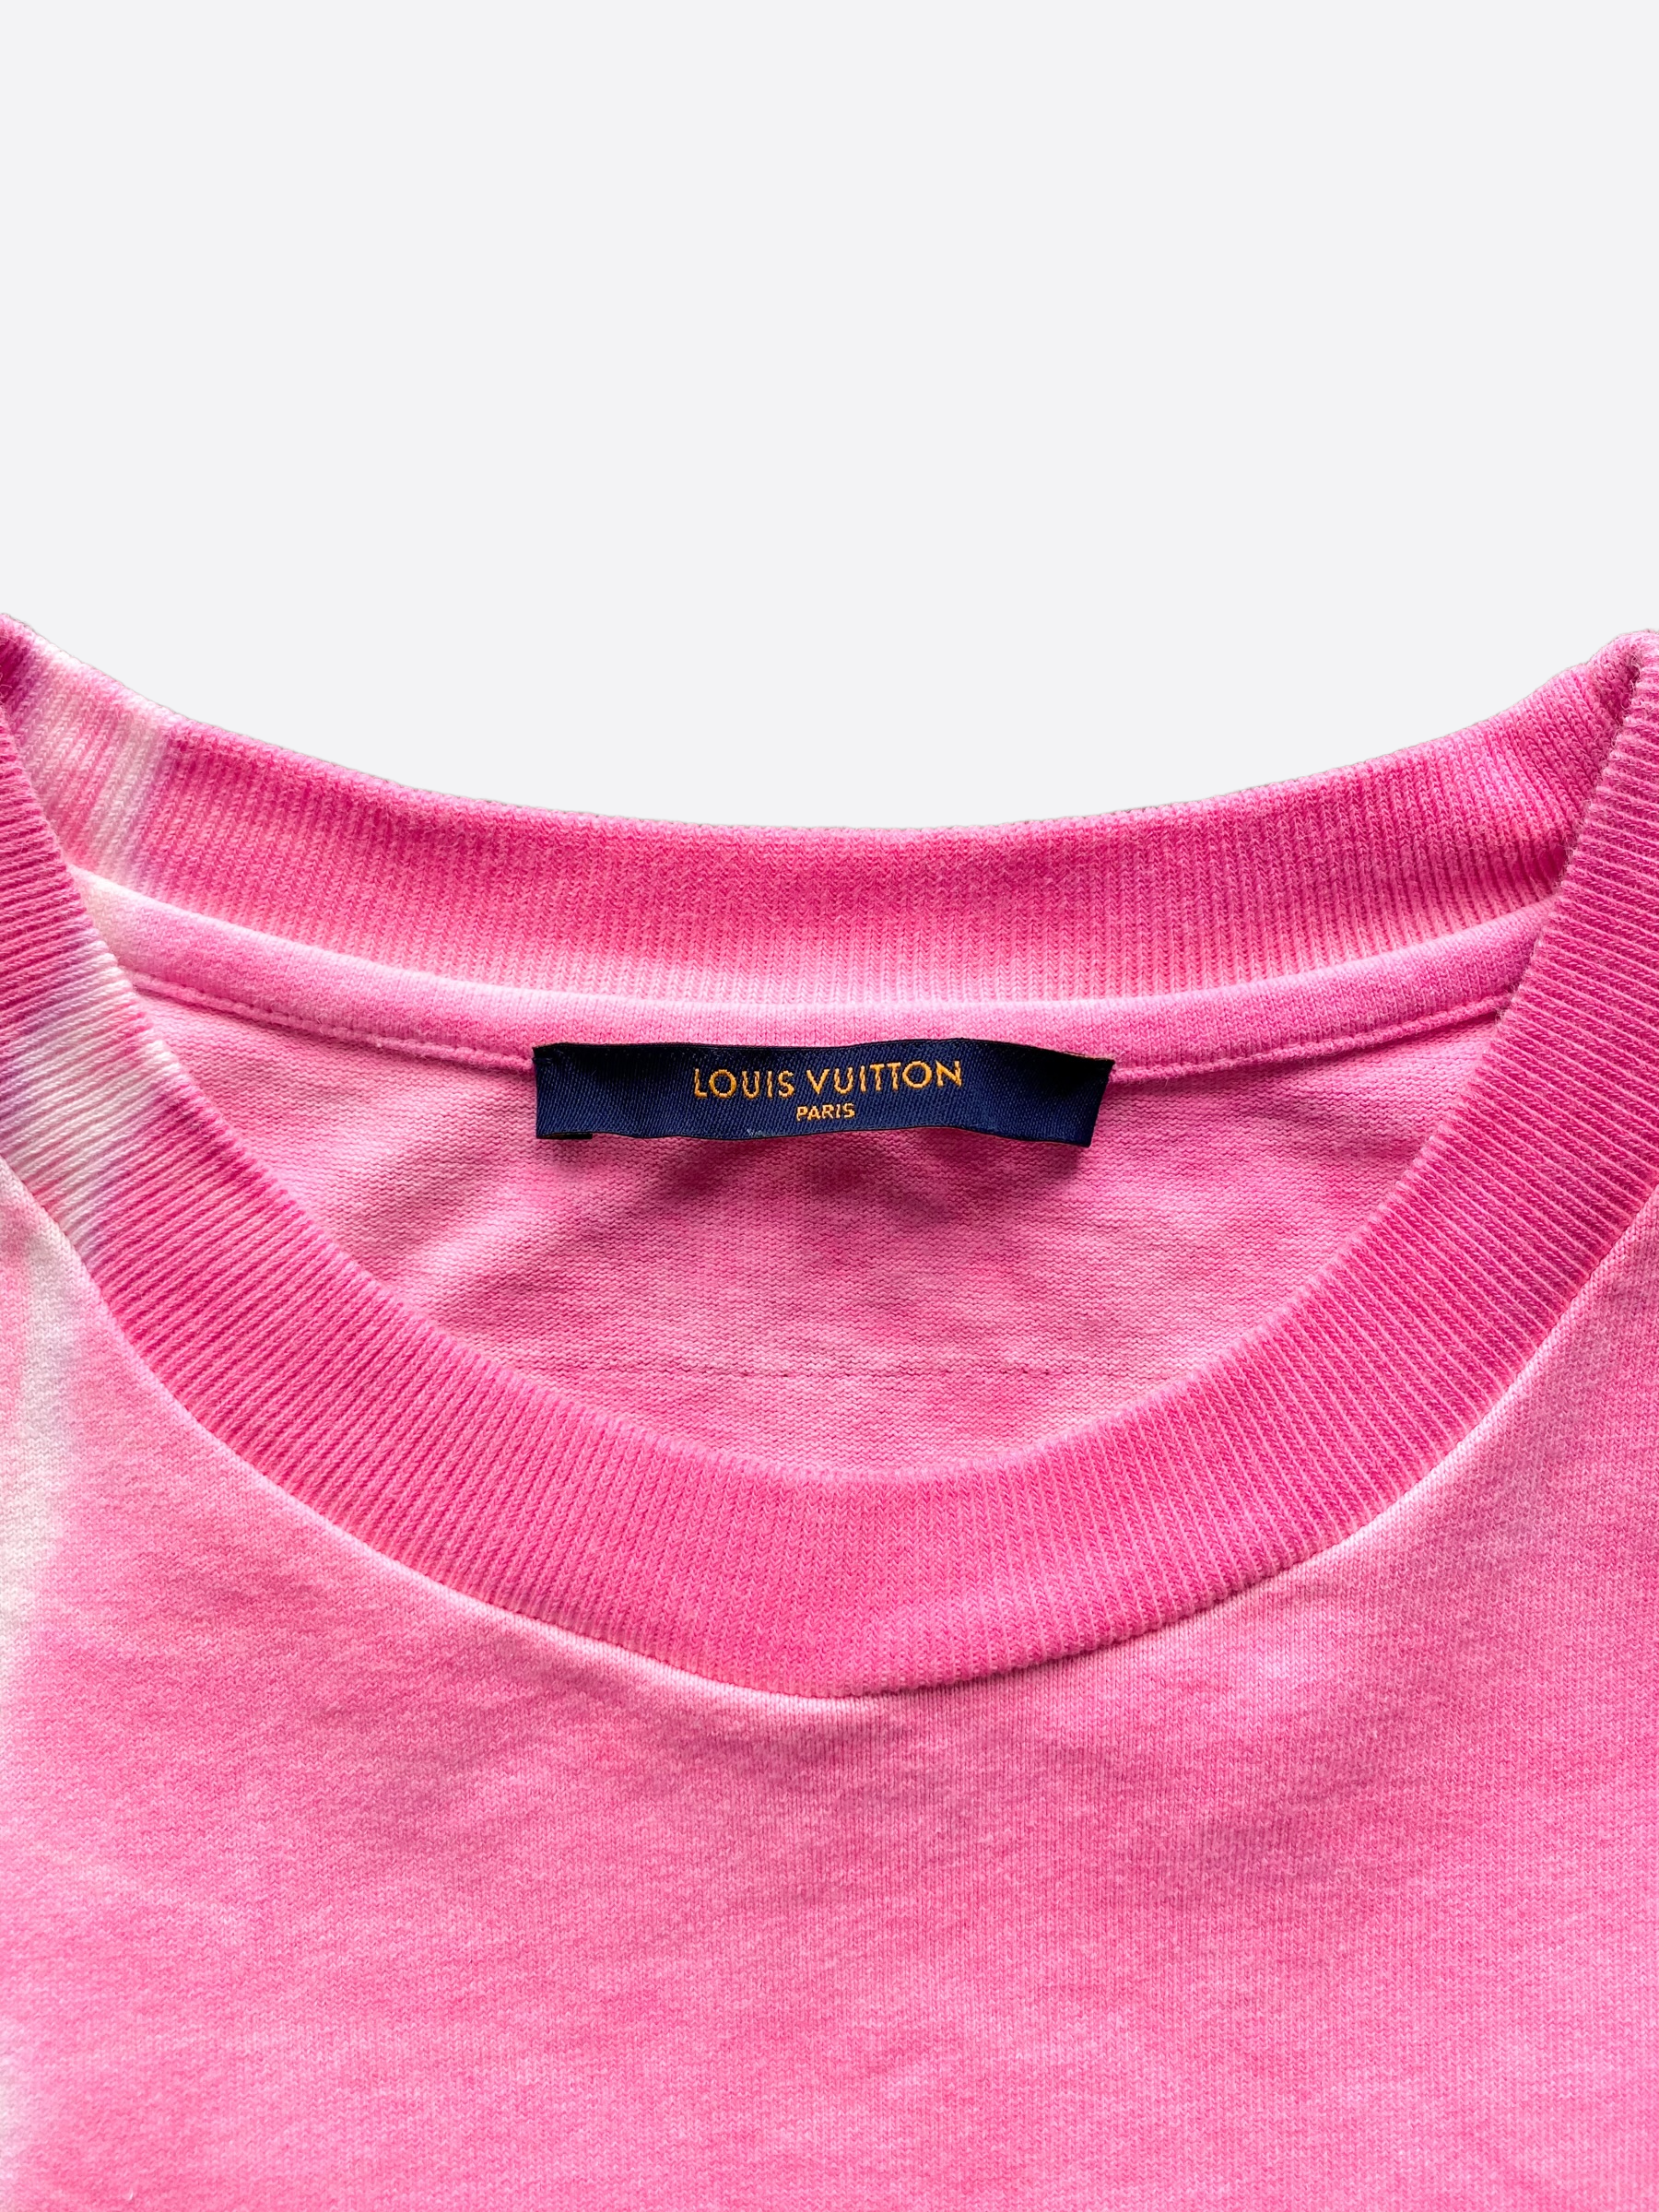 Louis Vuitton, crewneck sweater with neon pink logo - Unique